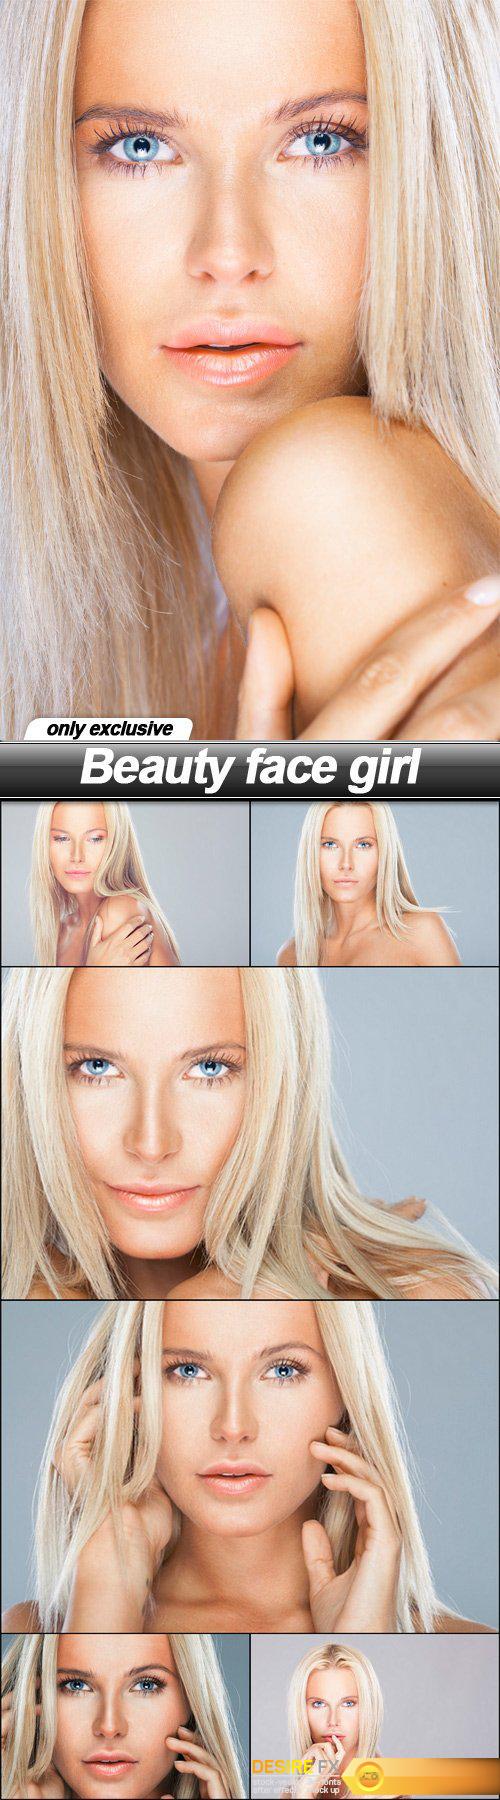 Beauty face girl - 7 UHQ JPEG